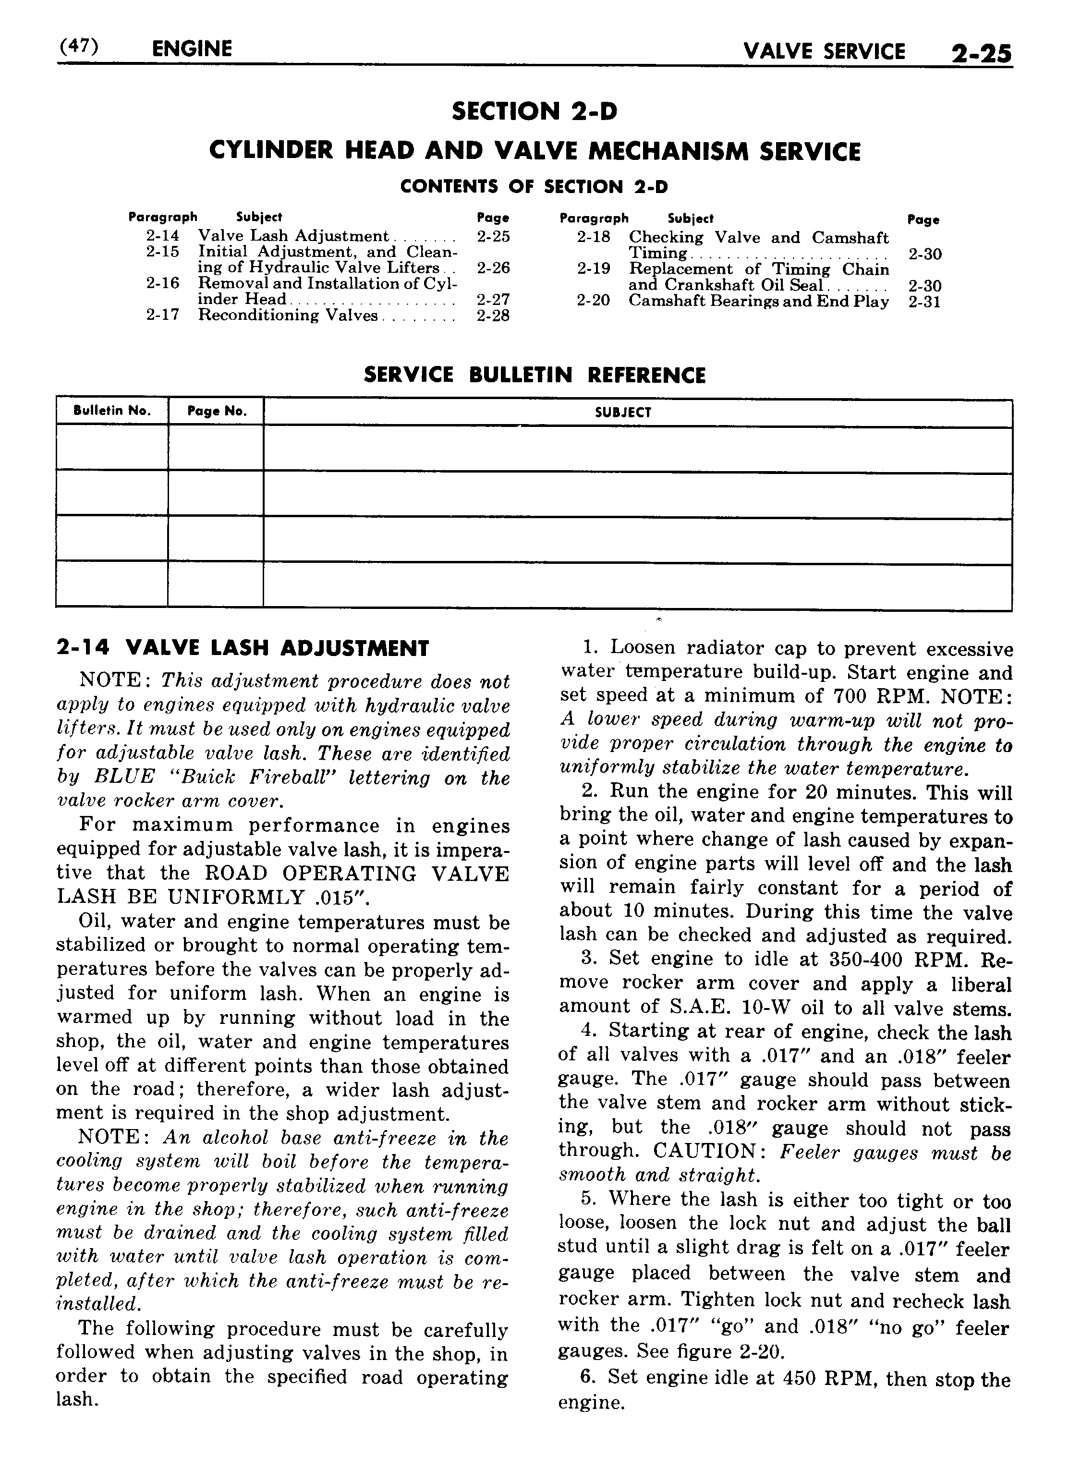 n_03 1948 Buick Shop Manual - Engine-025-025.jpg